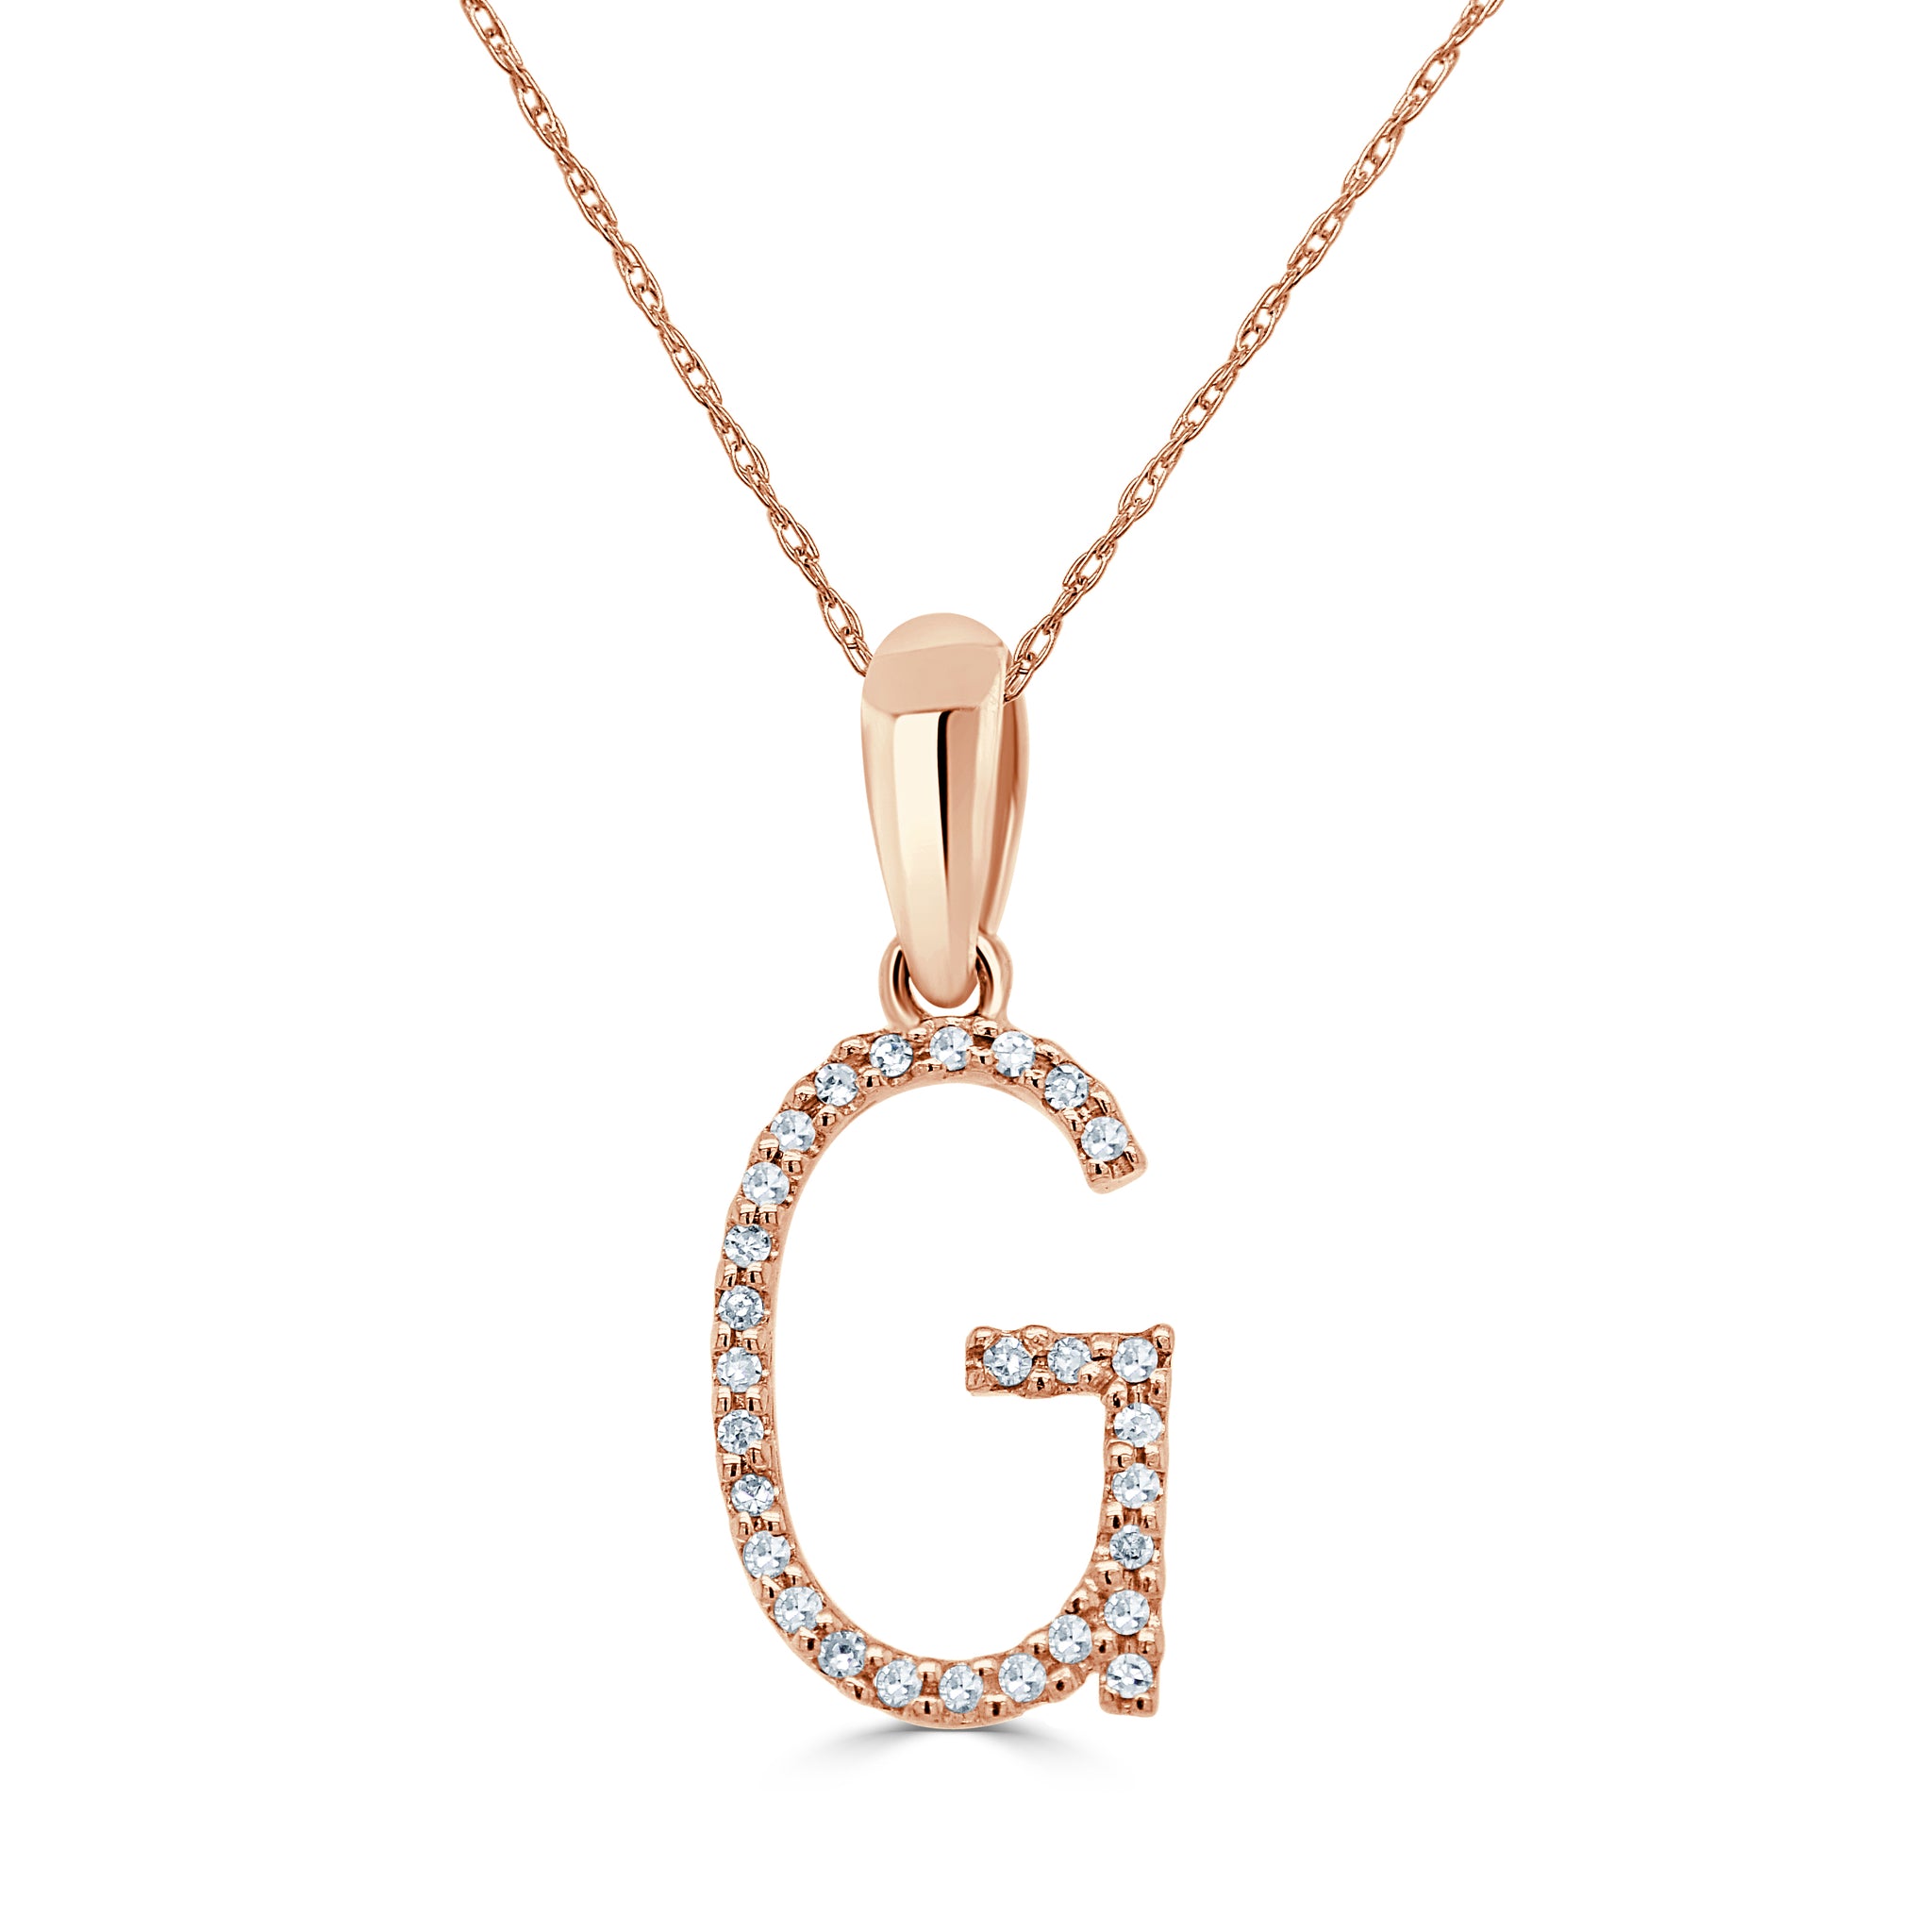 32ct Fancy Intense Pink Bare Diamond 14k Rose Gold Necklace